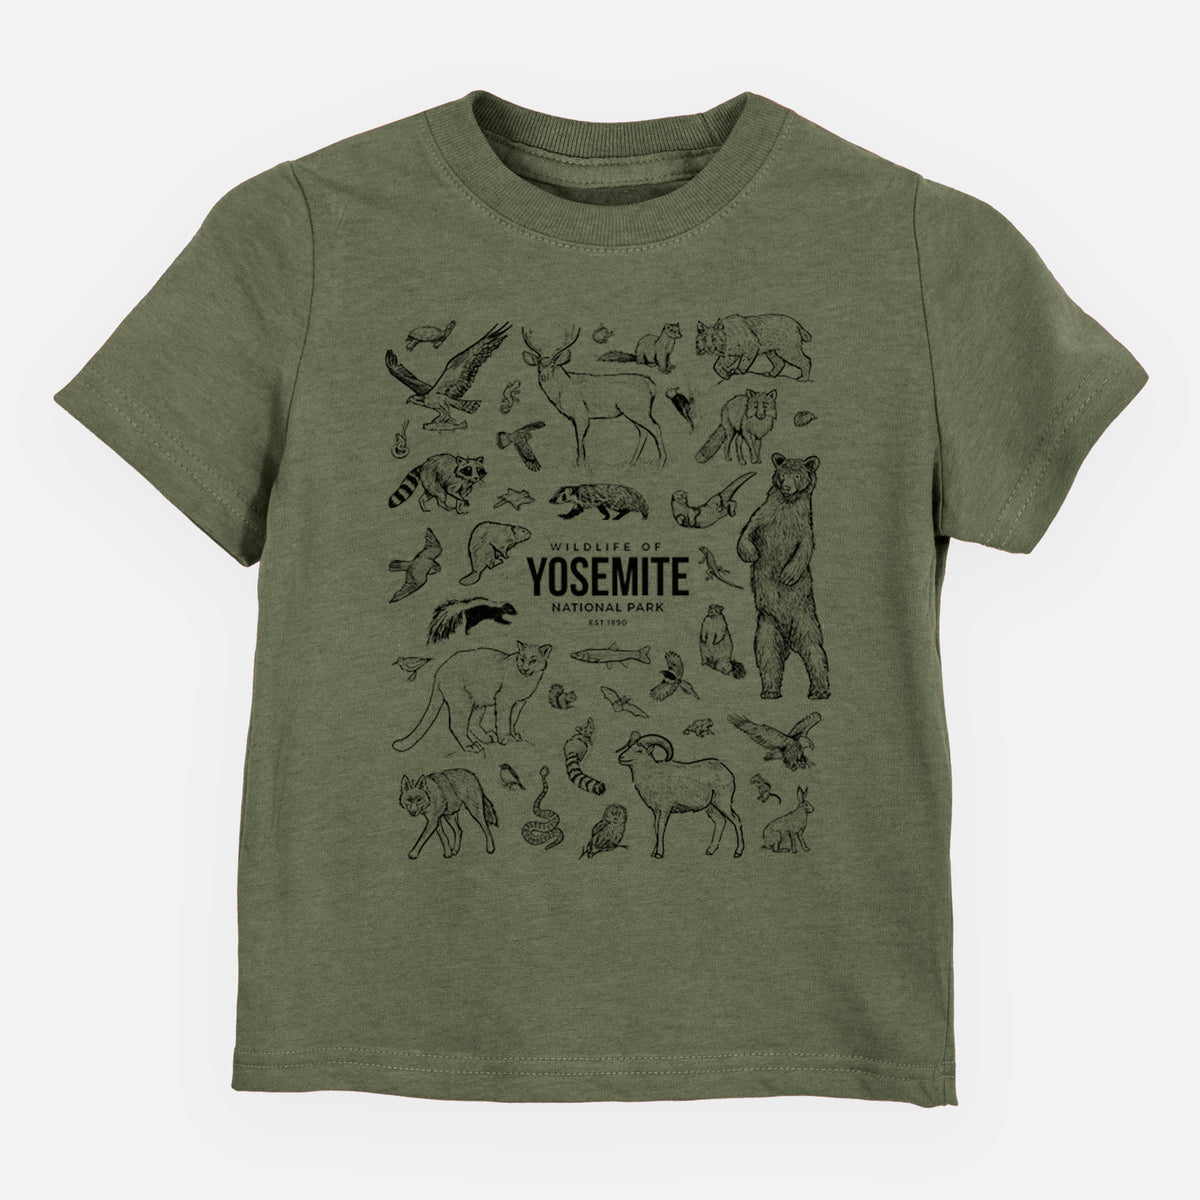 Wildlife of Yosemite National Park - Kids Shirt